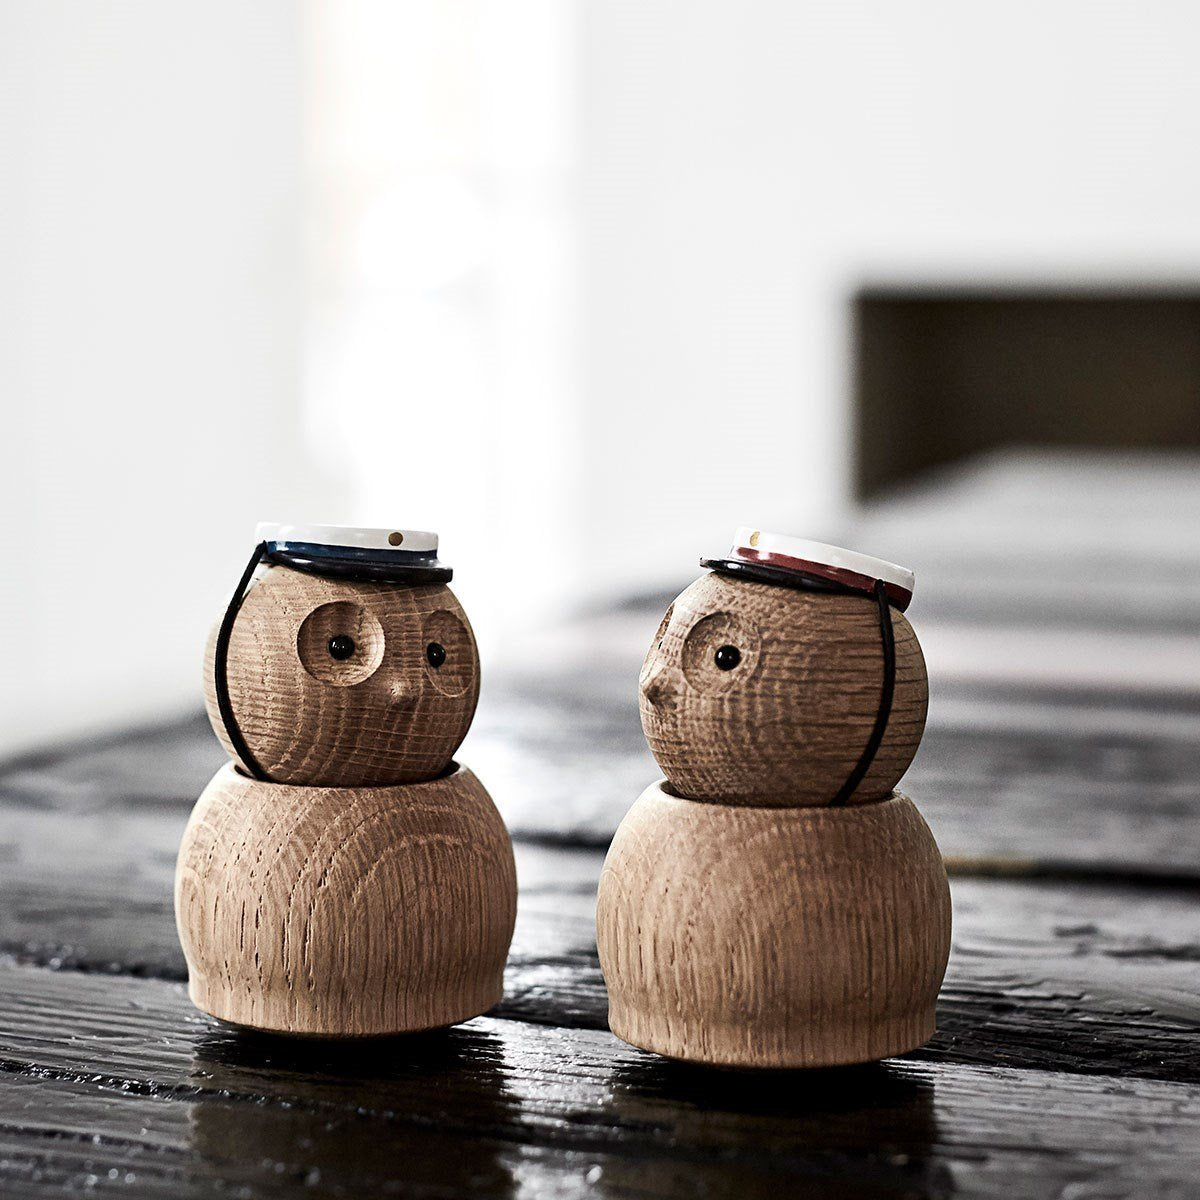 Andersen Furniture Wooden Owl, Oak, Small